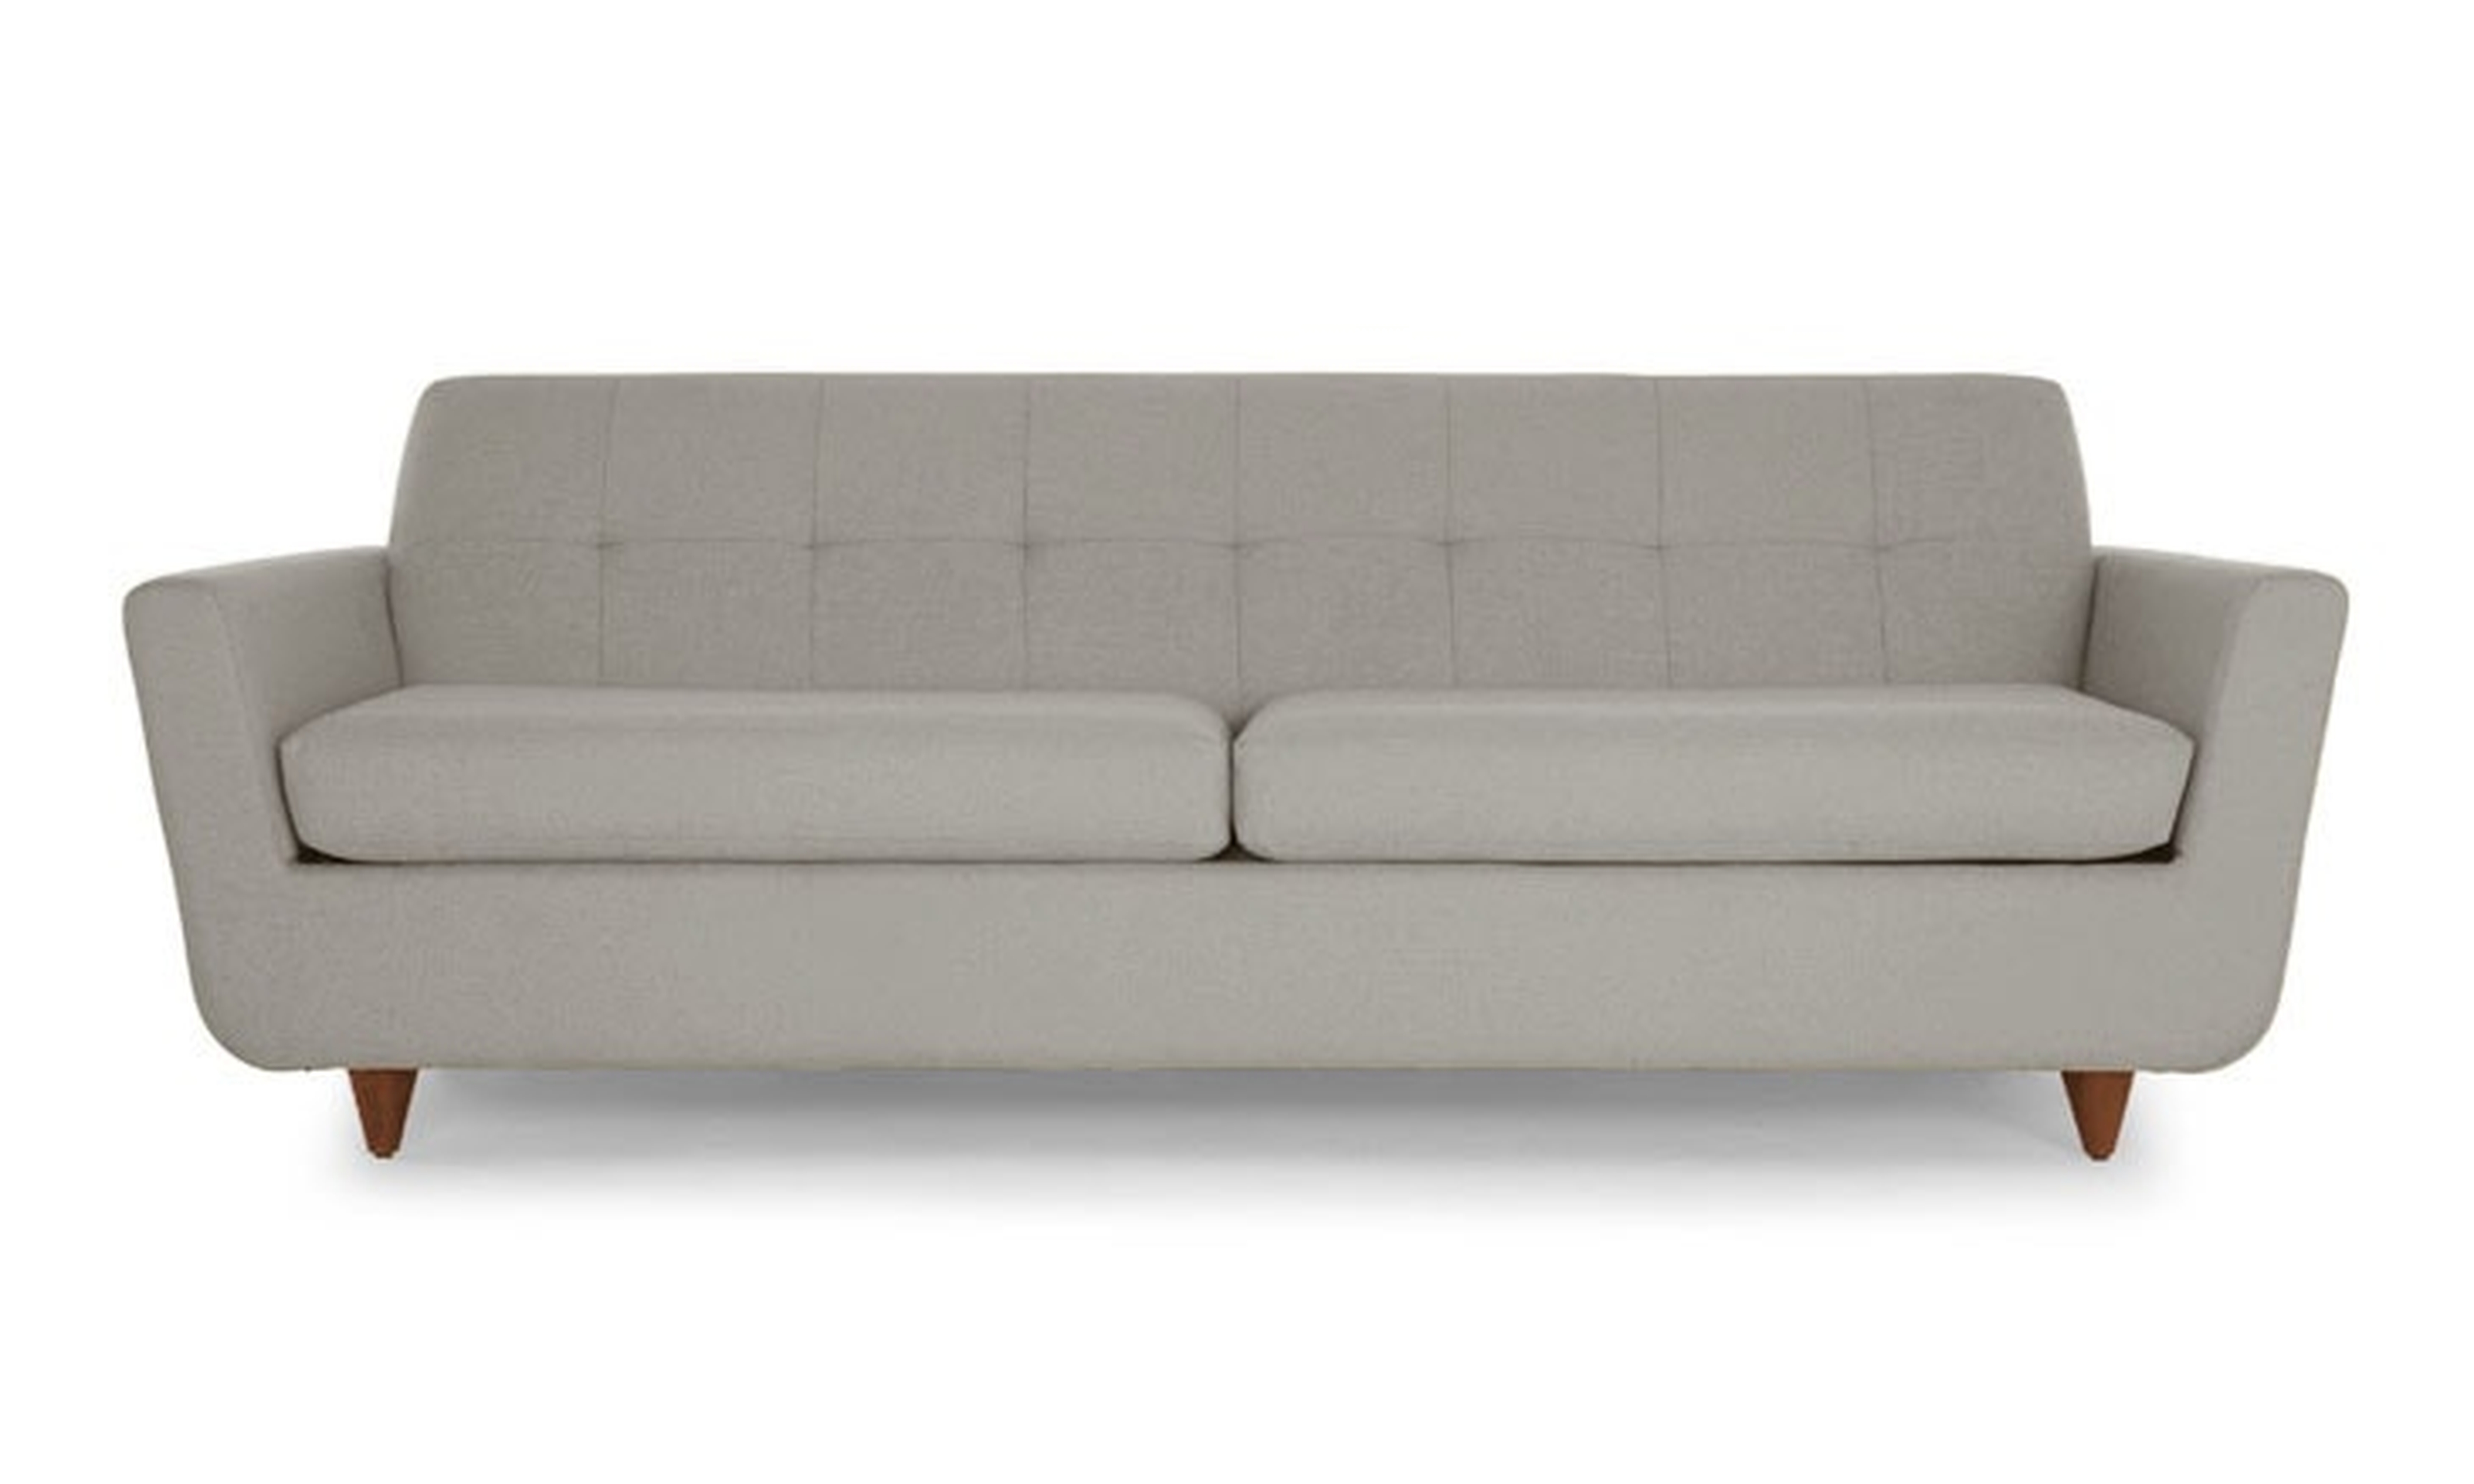 Hughes Mid Century Modern Sleeper Sofa - Impact Flurry - Medium - Joybird